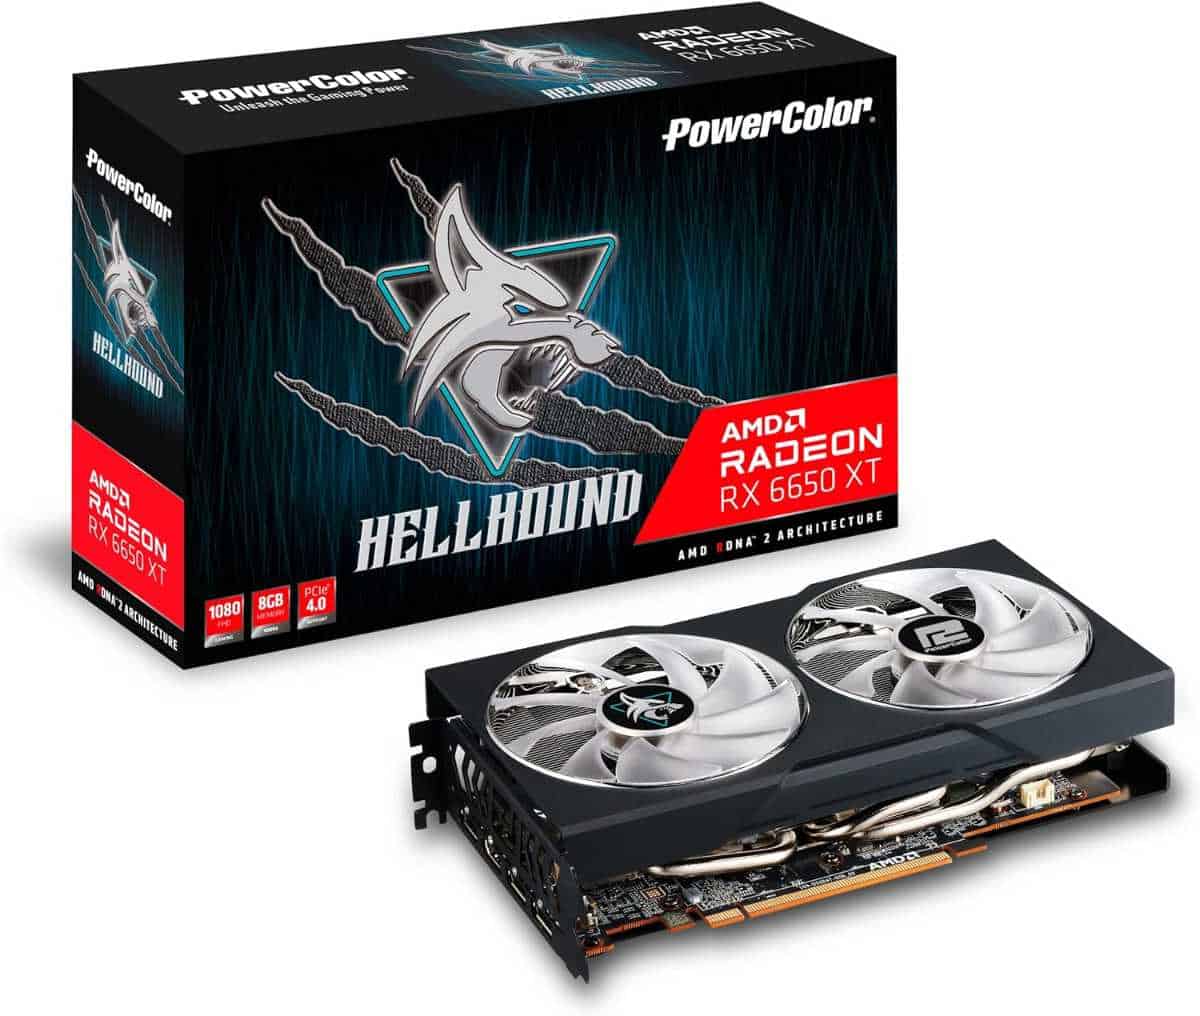 PowerColor Hellhound AMD Radeon RX 6650 XT